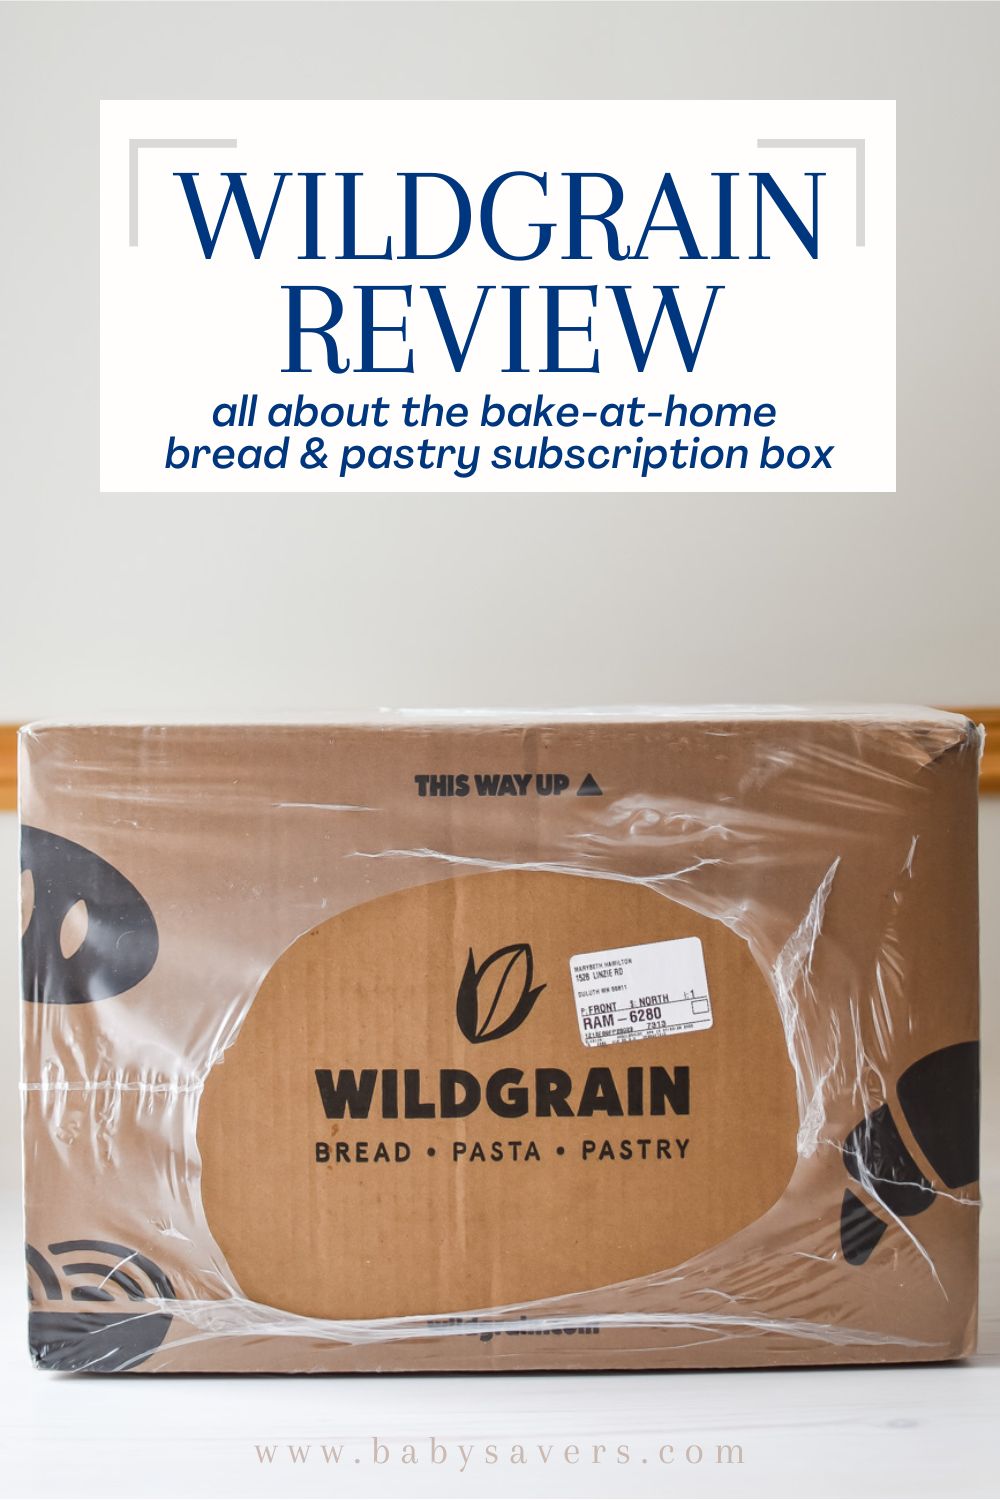 Wildgrain reviews with the Wildgrain subscription box